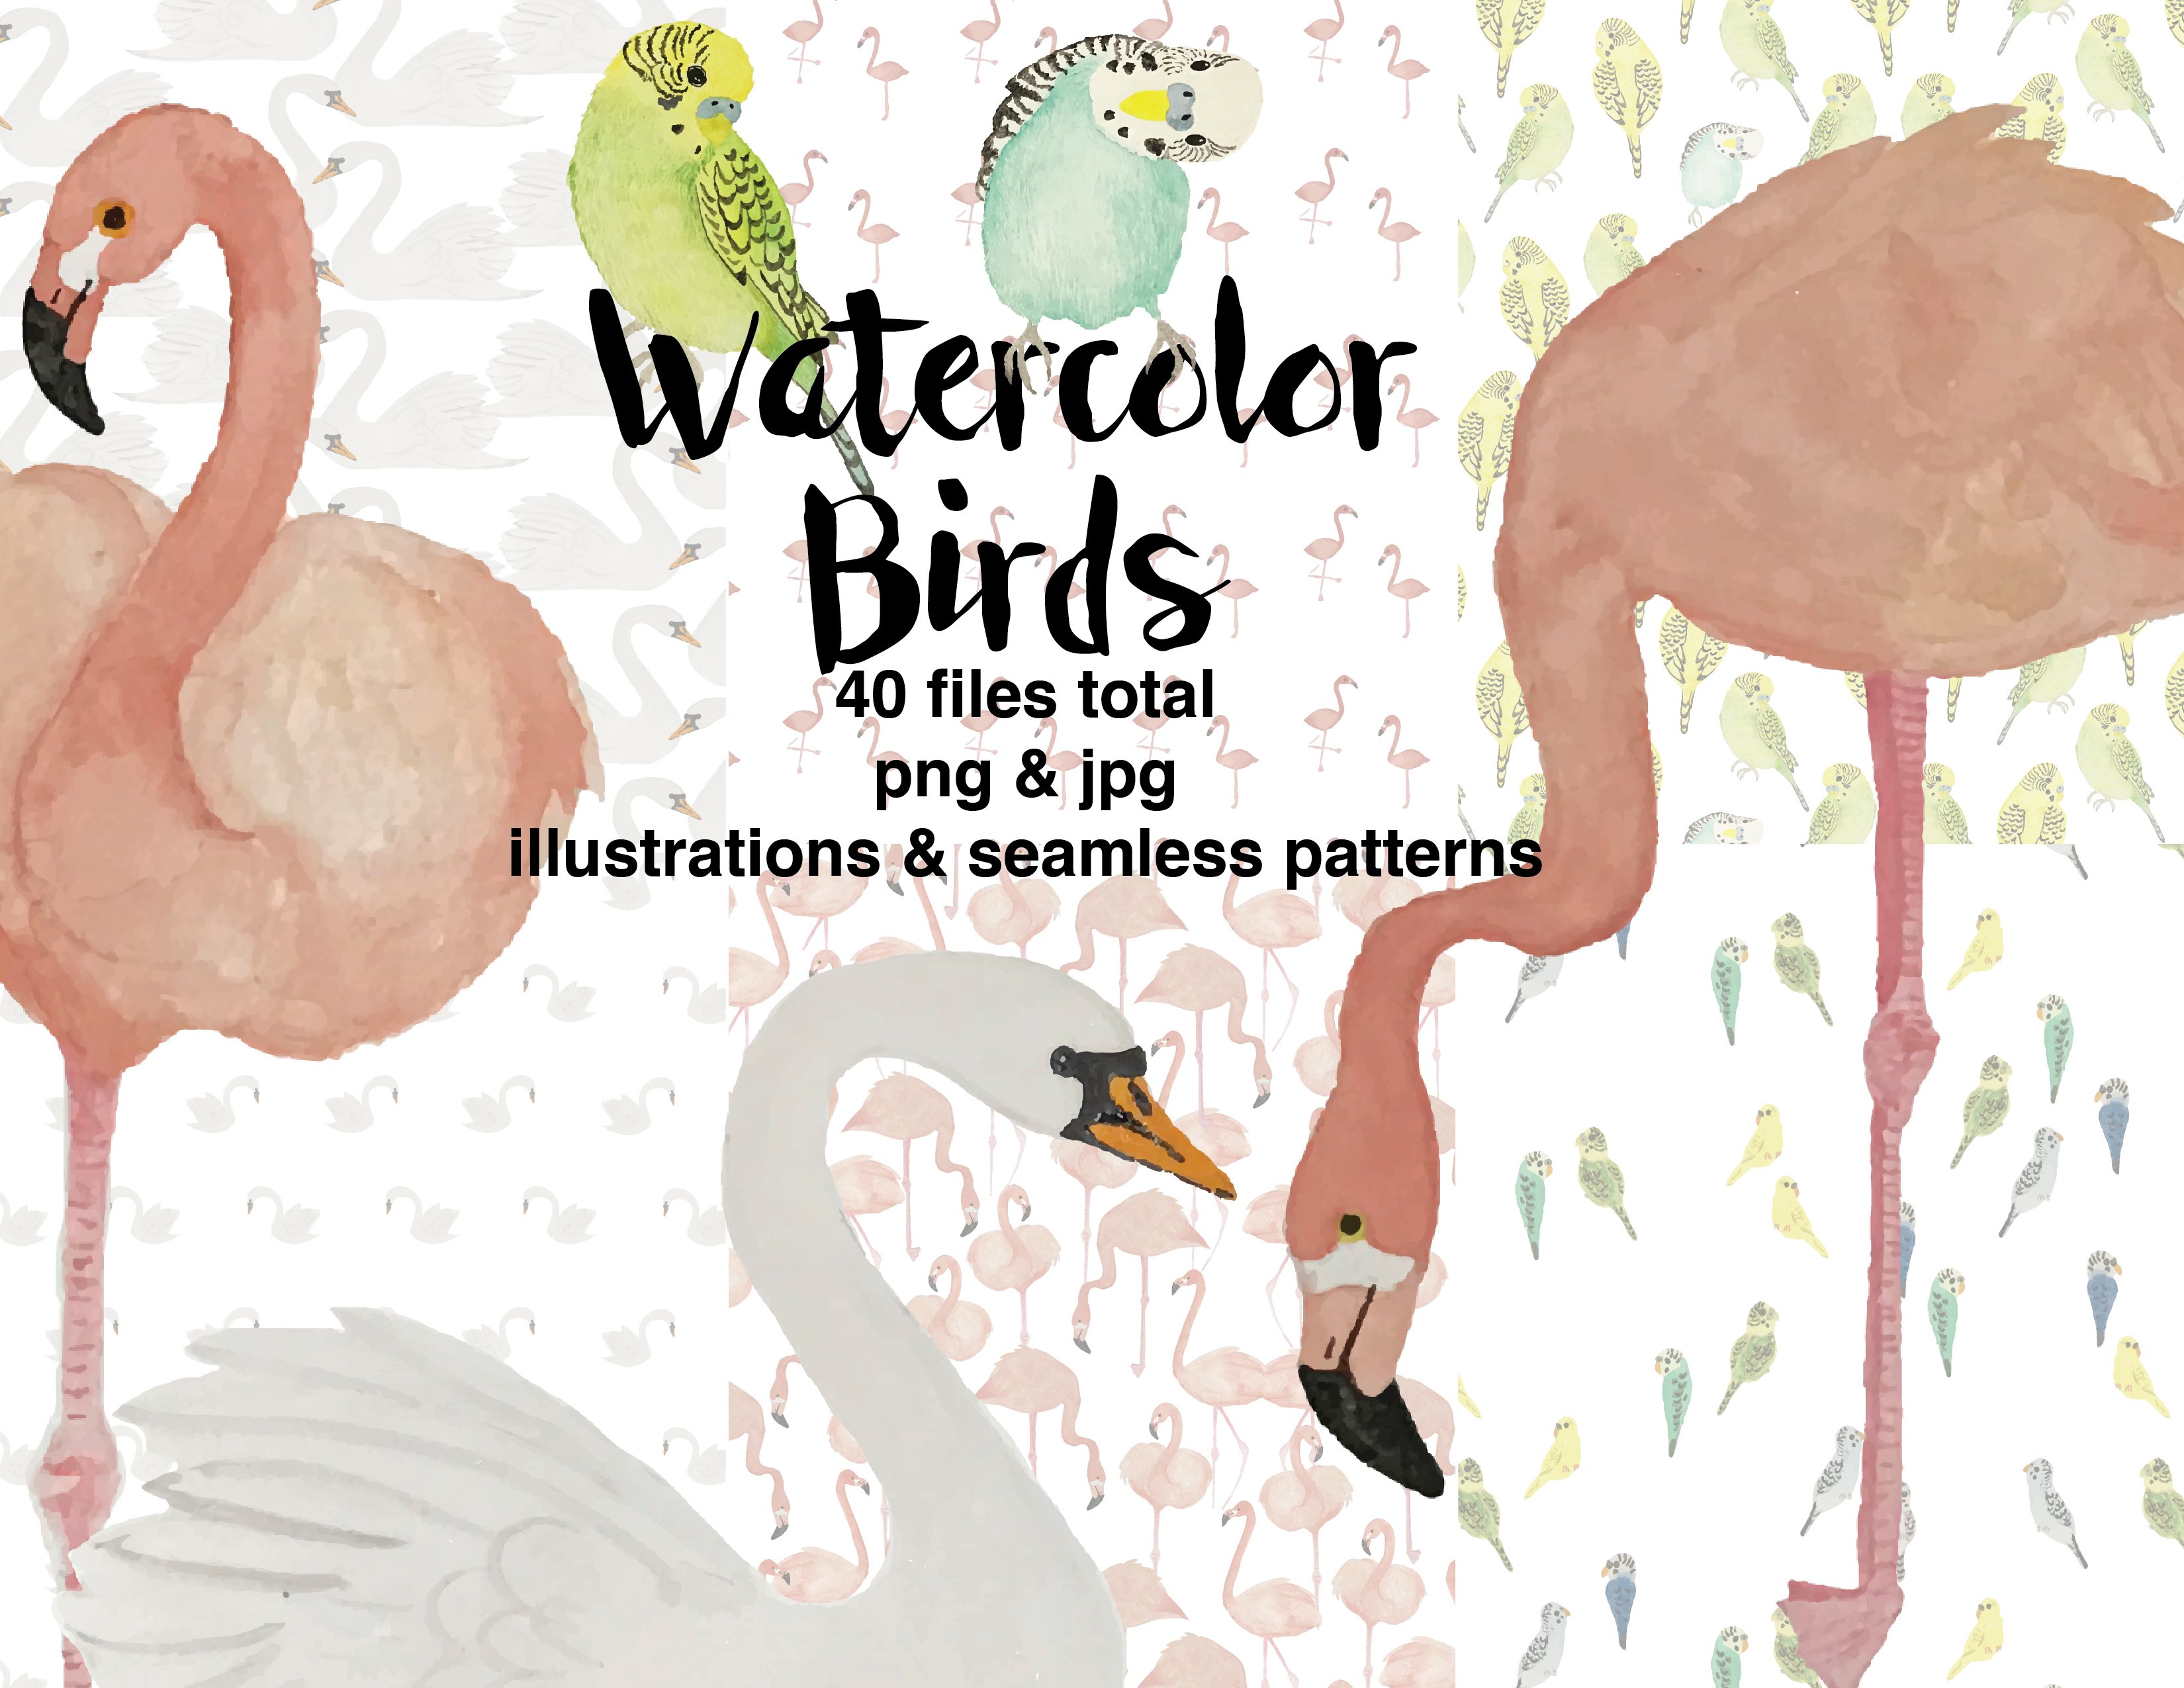 Watercolor Birds cover image.